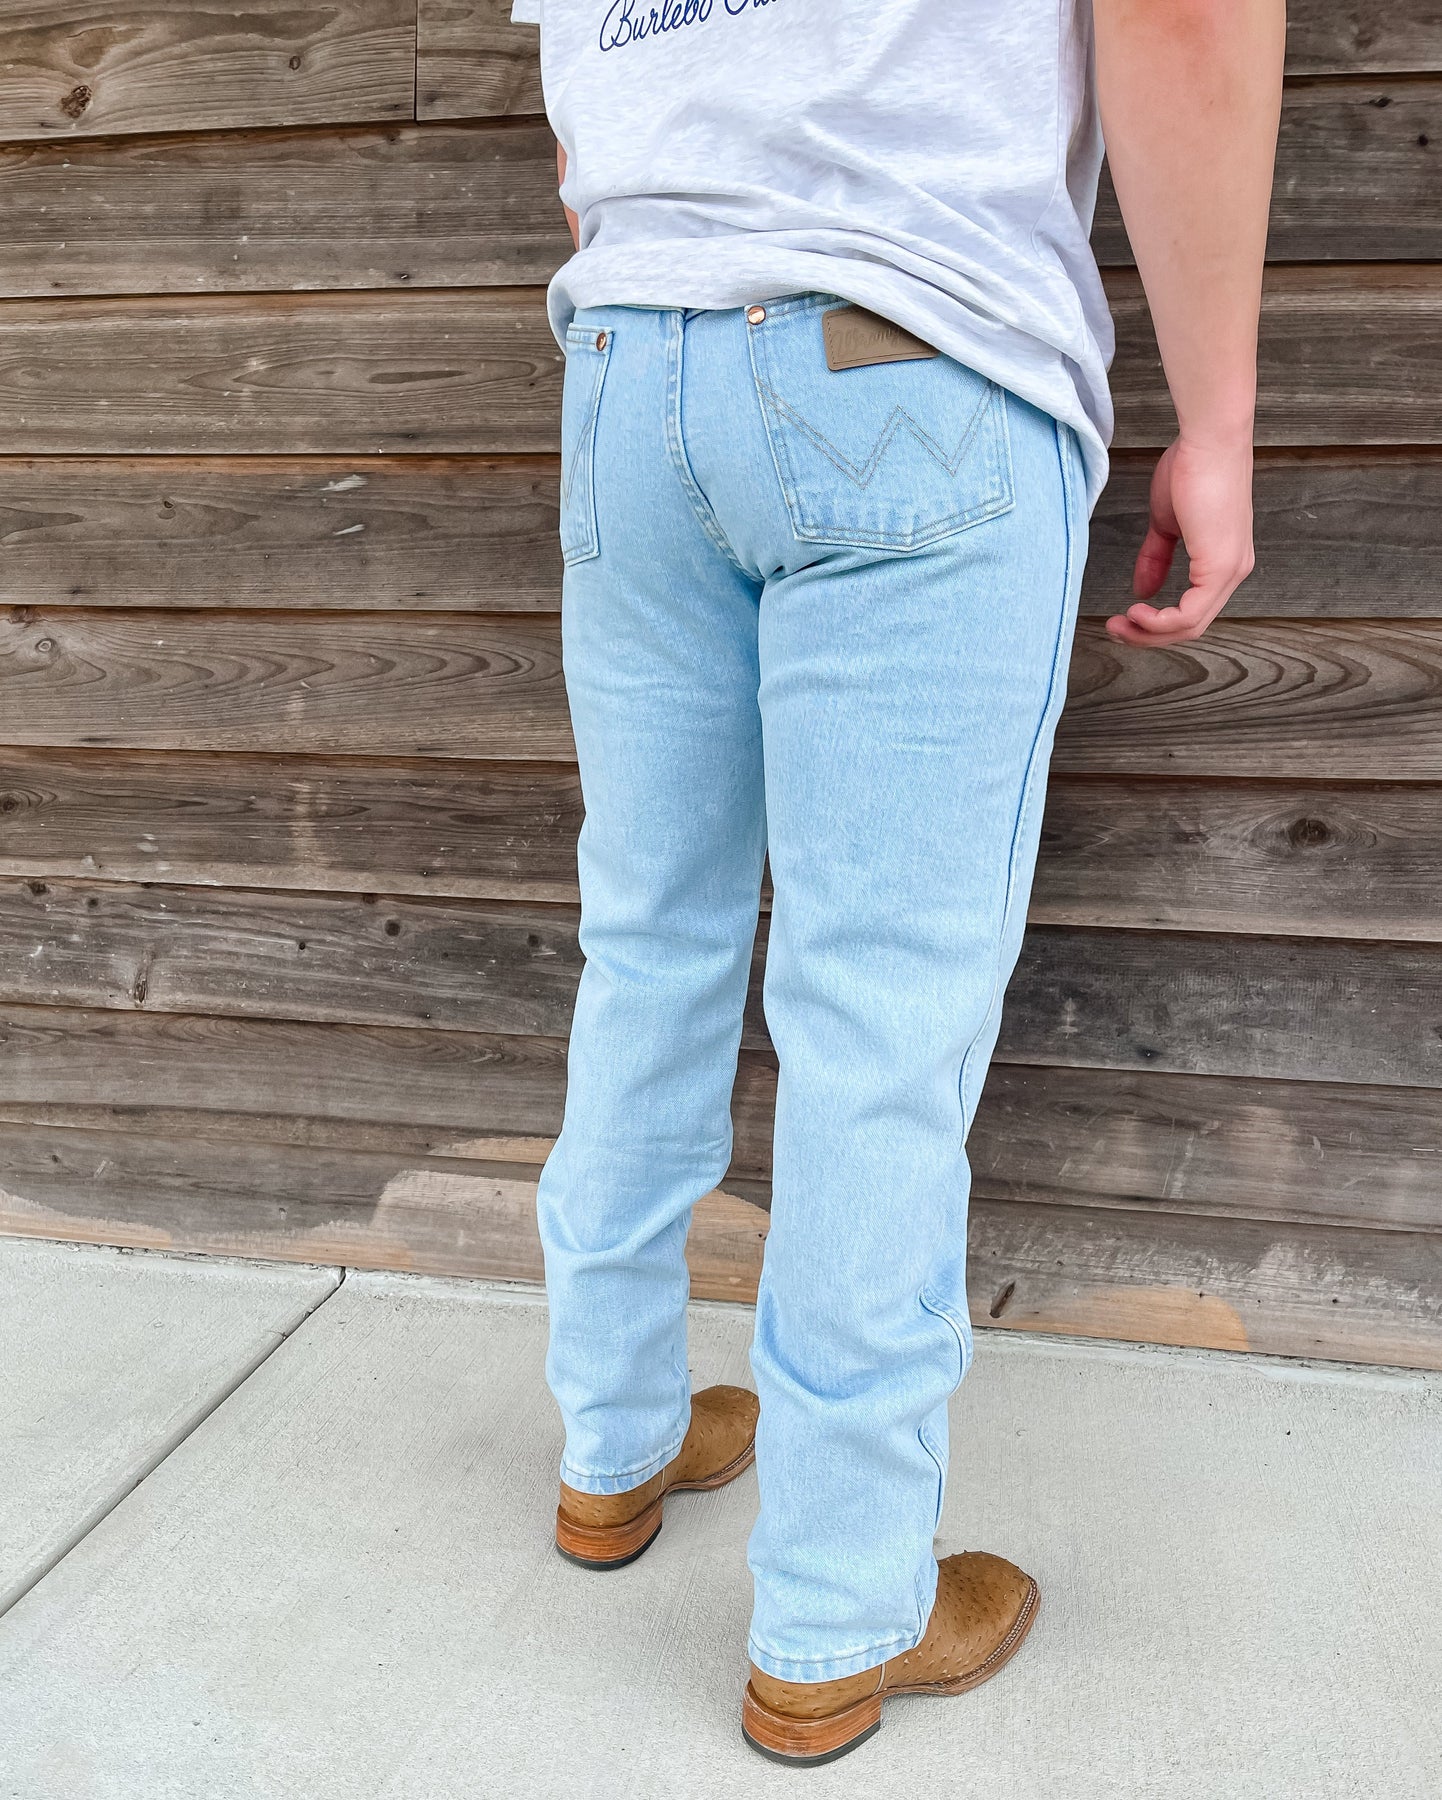 Wrangler Cowboy Cut  Original Fit Jeans for Men